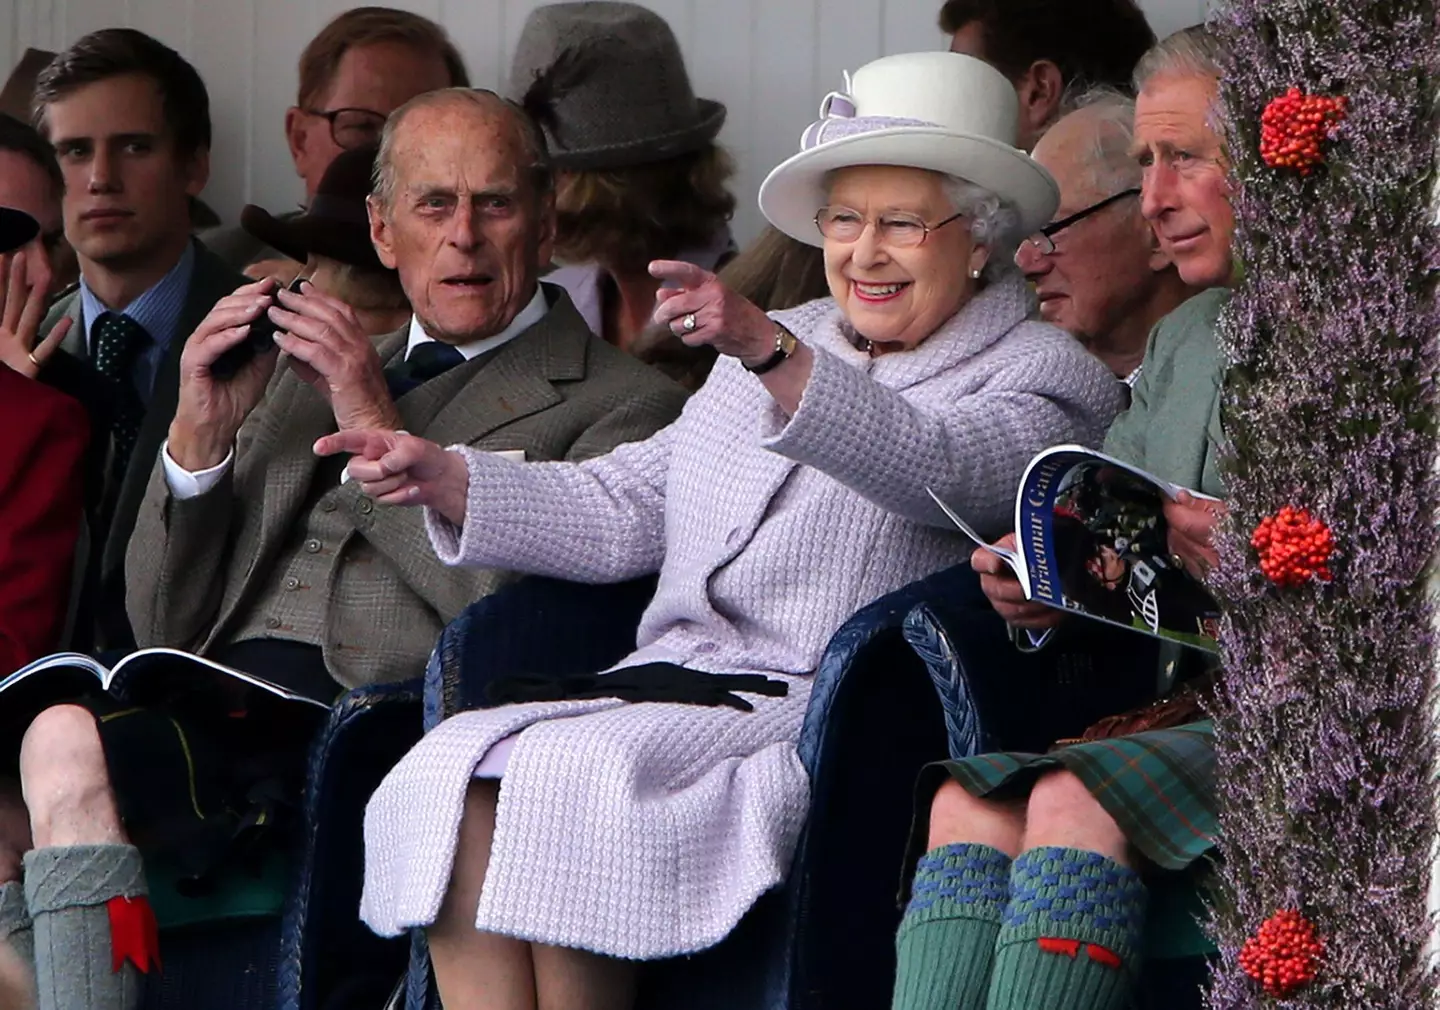 The Queen passed away on Thursday, 8 September.